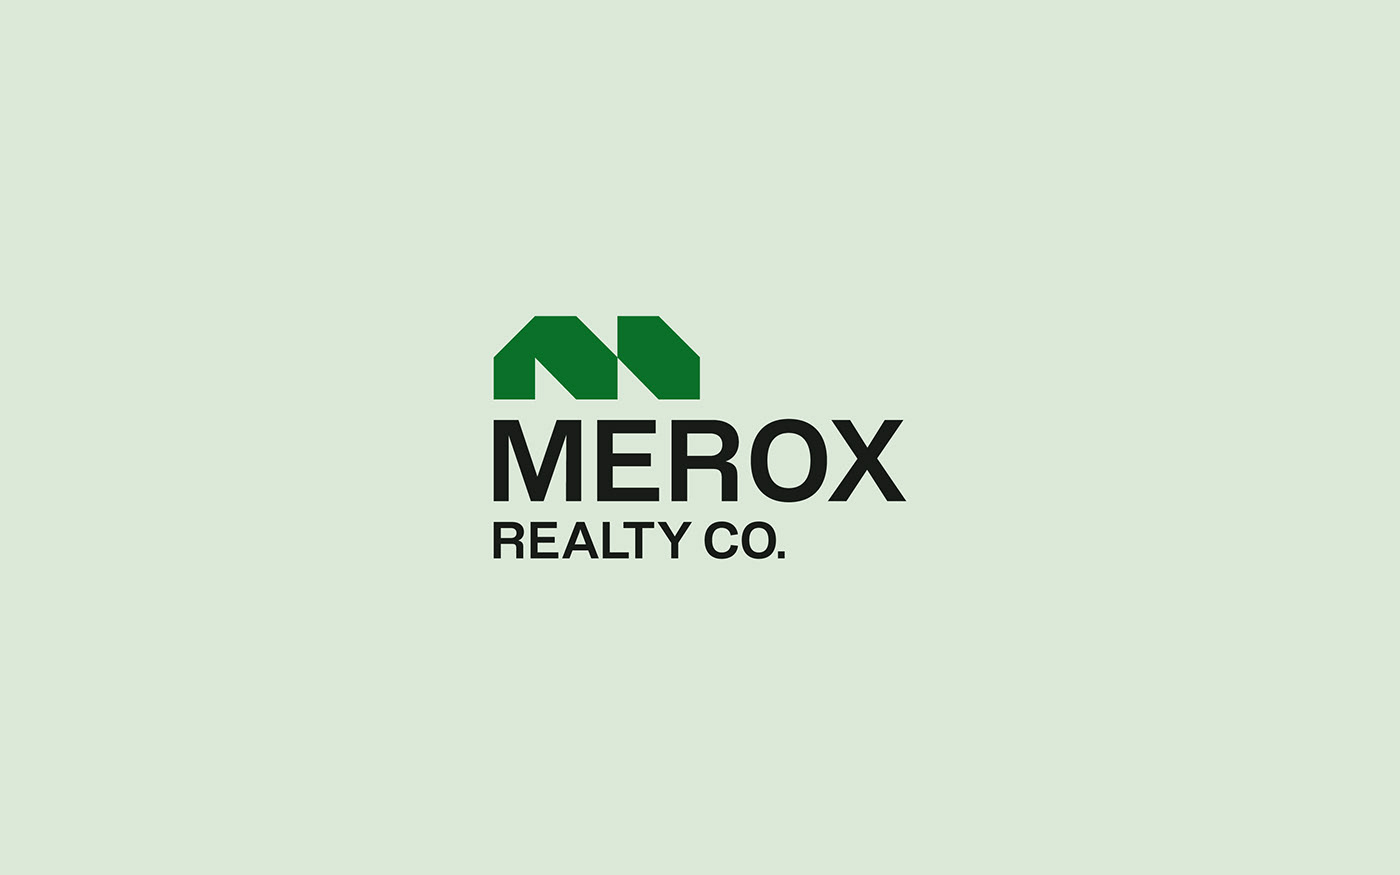 
MEROX REALTY CO. | Real Estate Branding